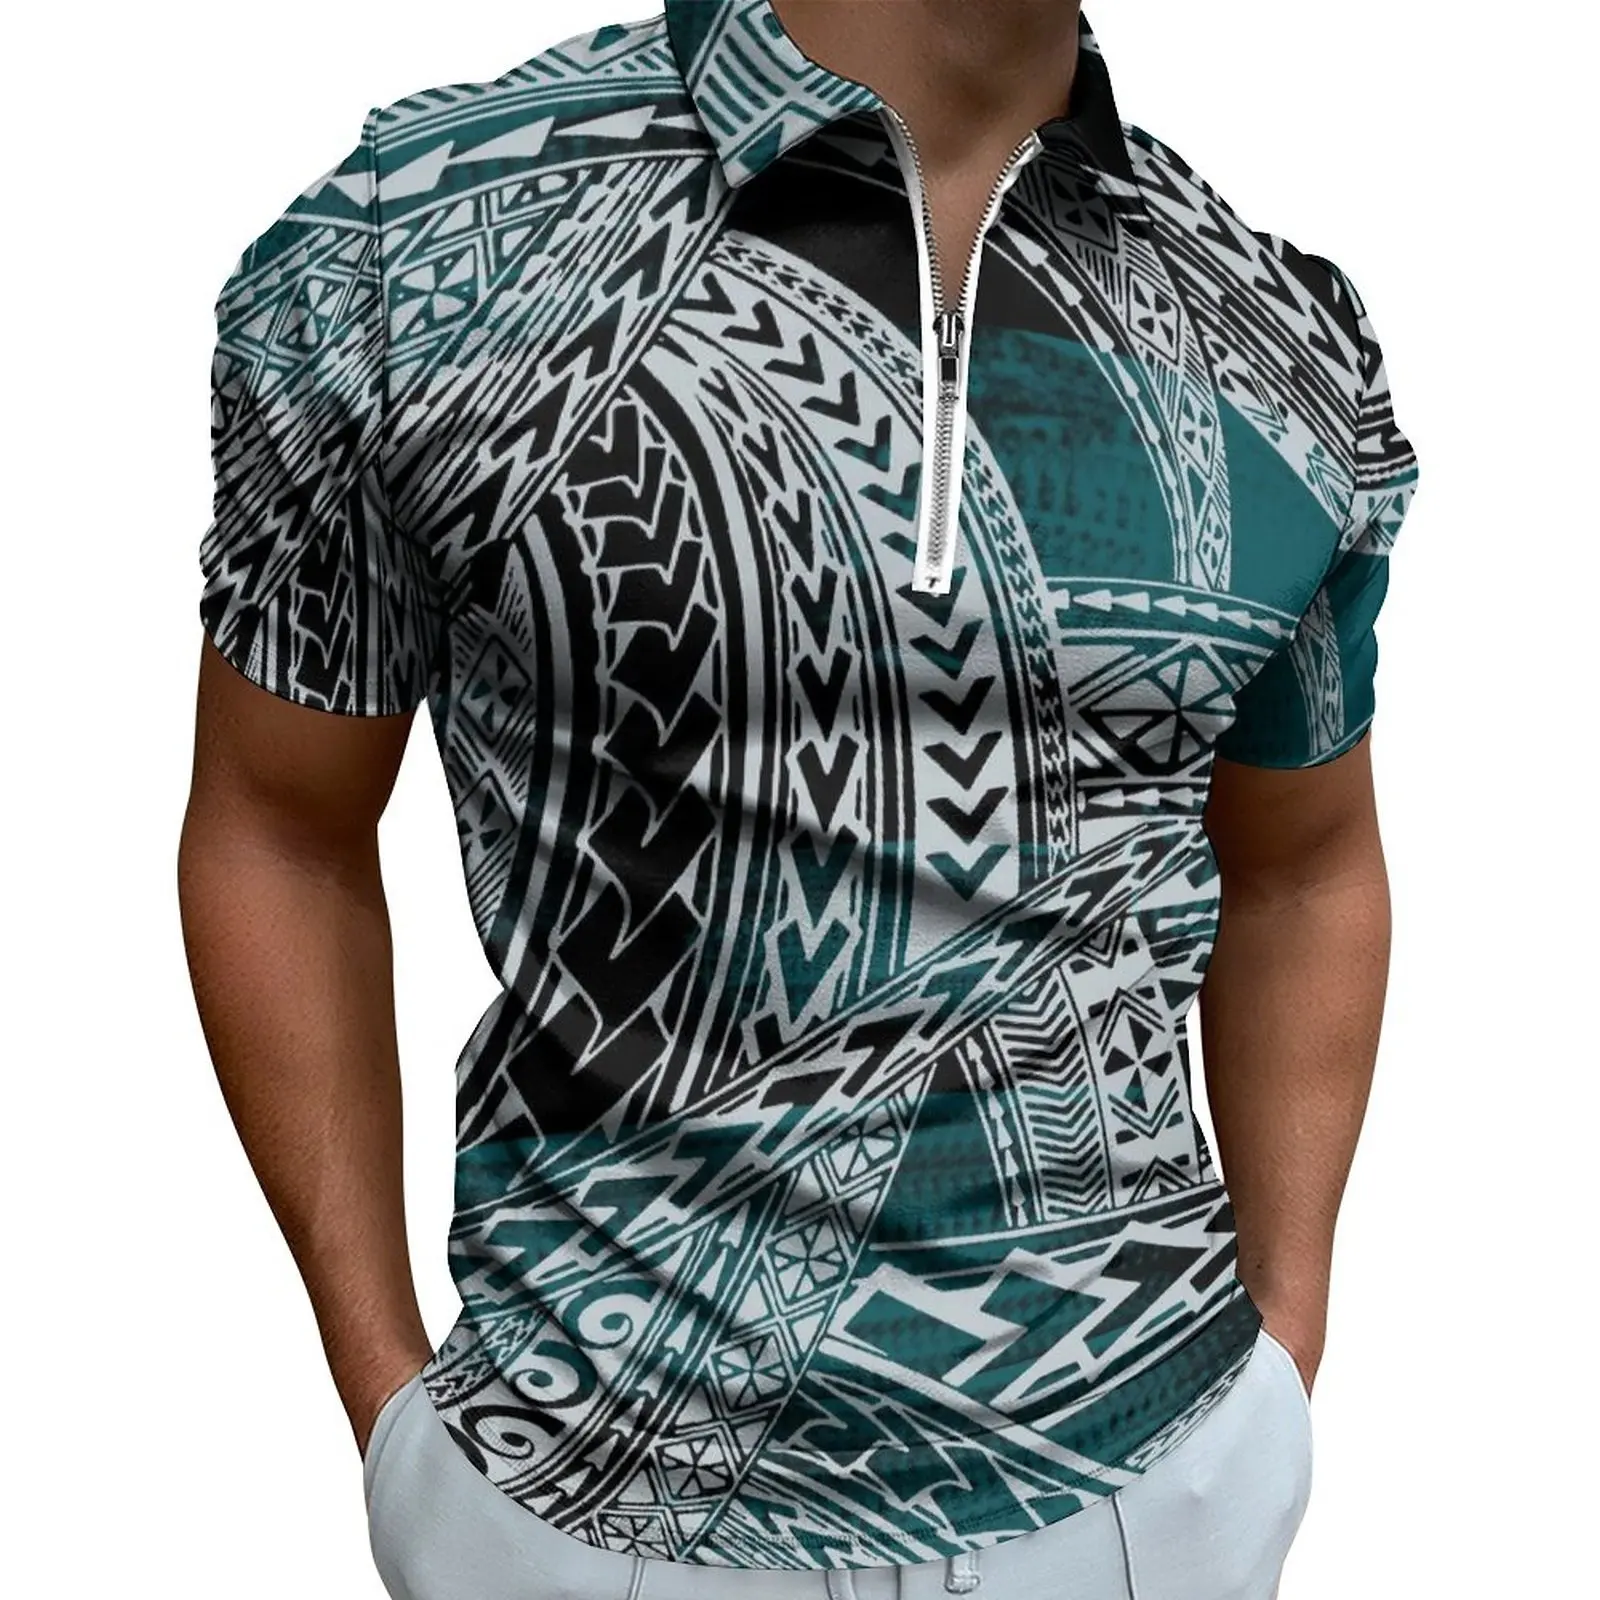 Samoan-polos informales con logotipo personalizado para hombre, camisa de talla grande con cremallera, cuello redondo, camiseta de manga corta, polo polinesiano, nuevo diseño